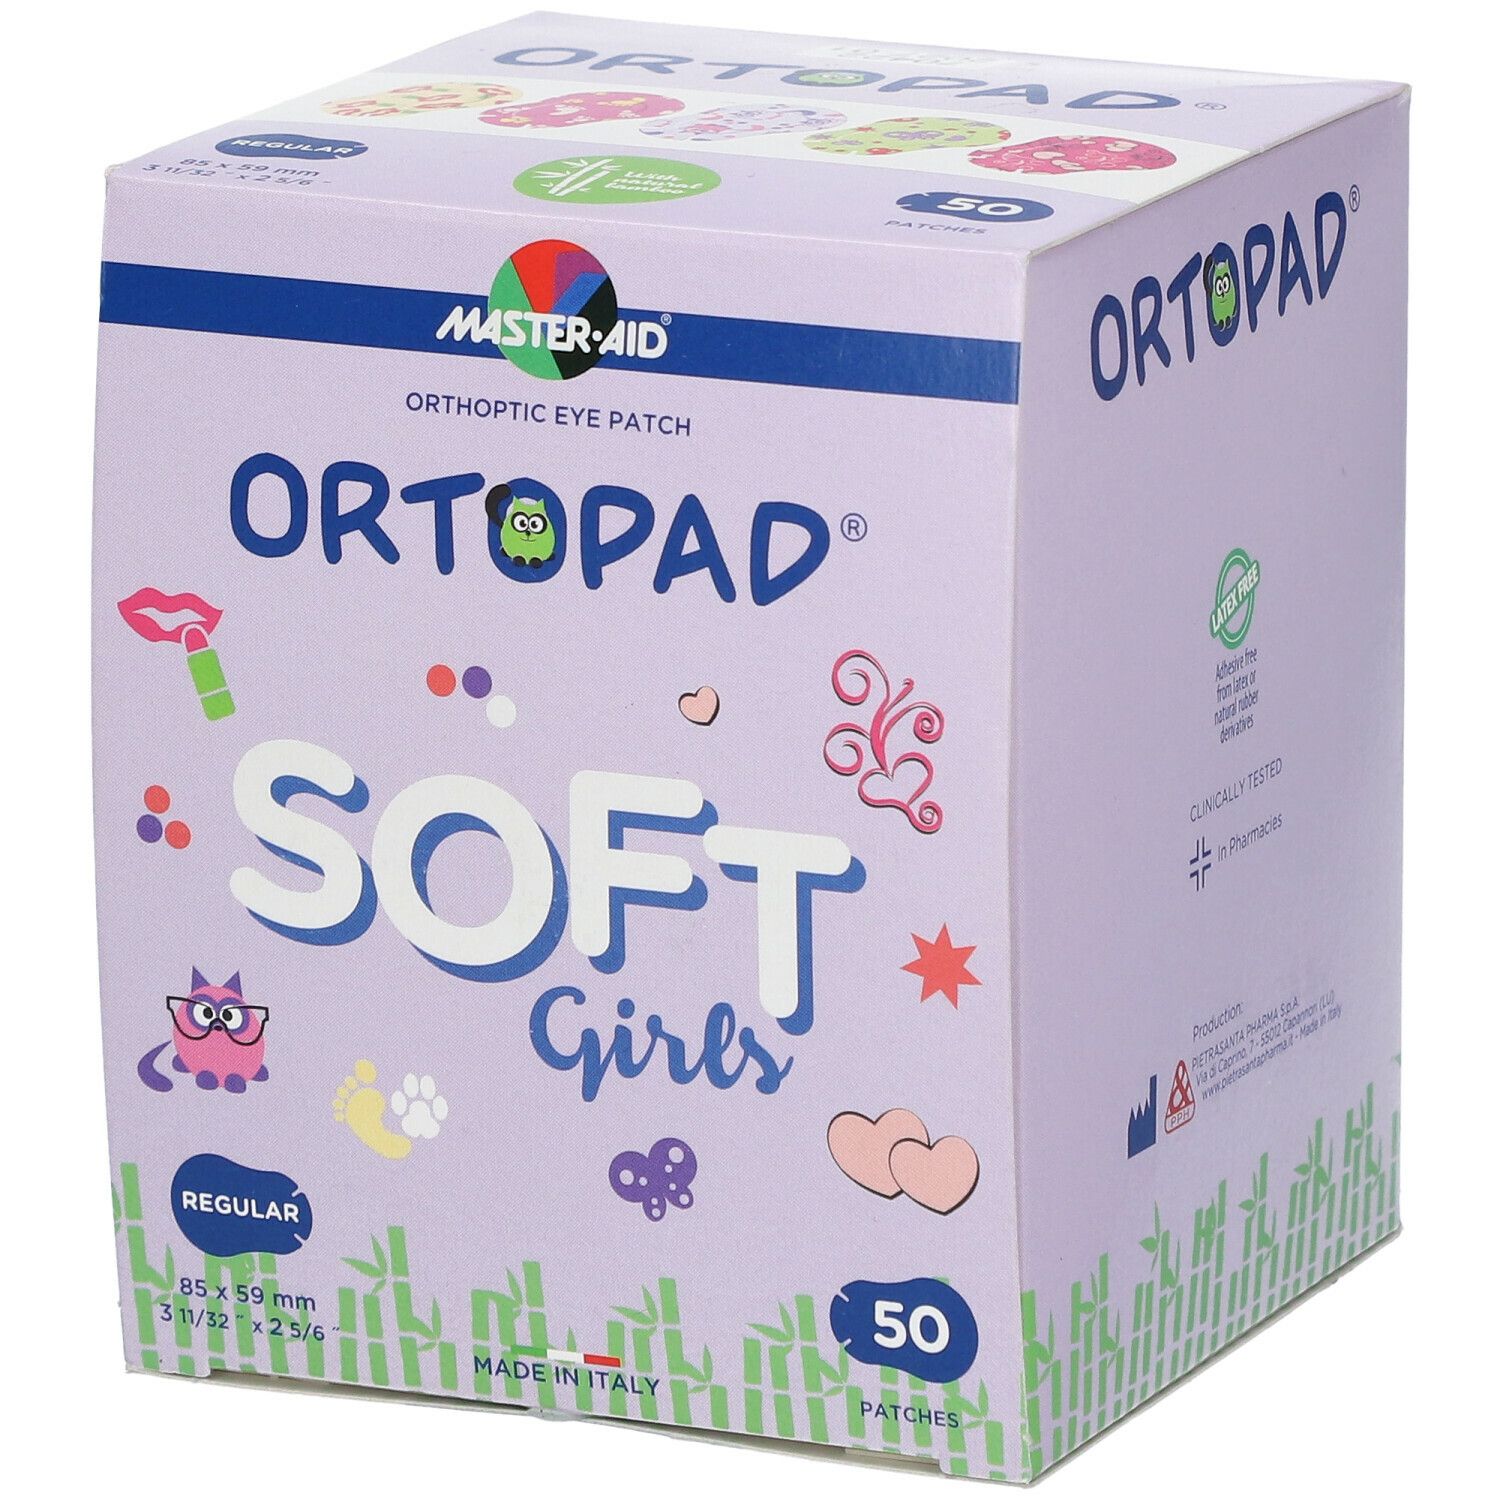 ORTOPAD® soft girls Regular 85 x 59 mm